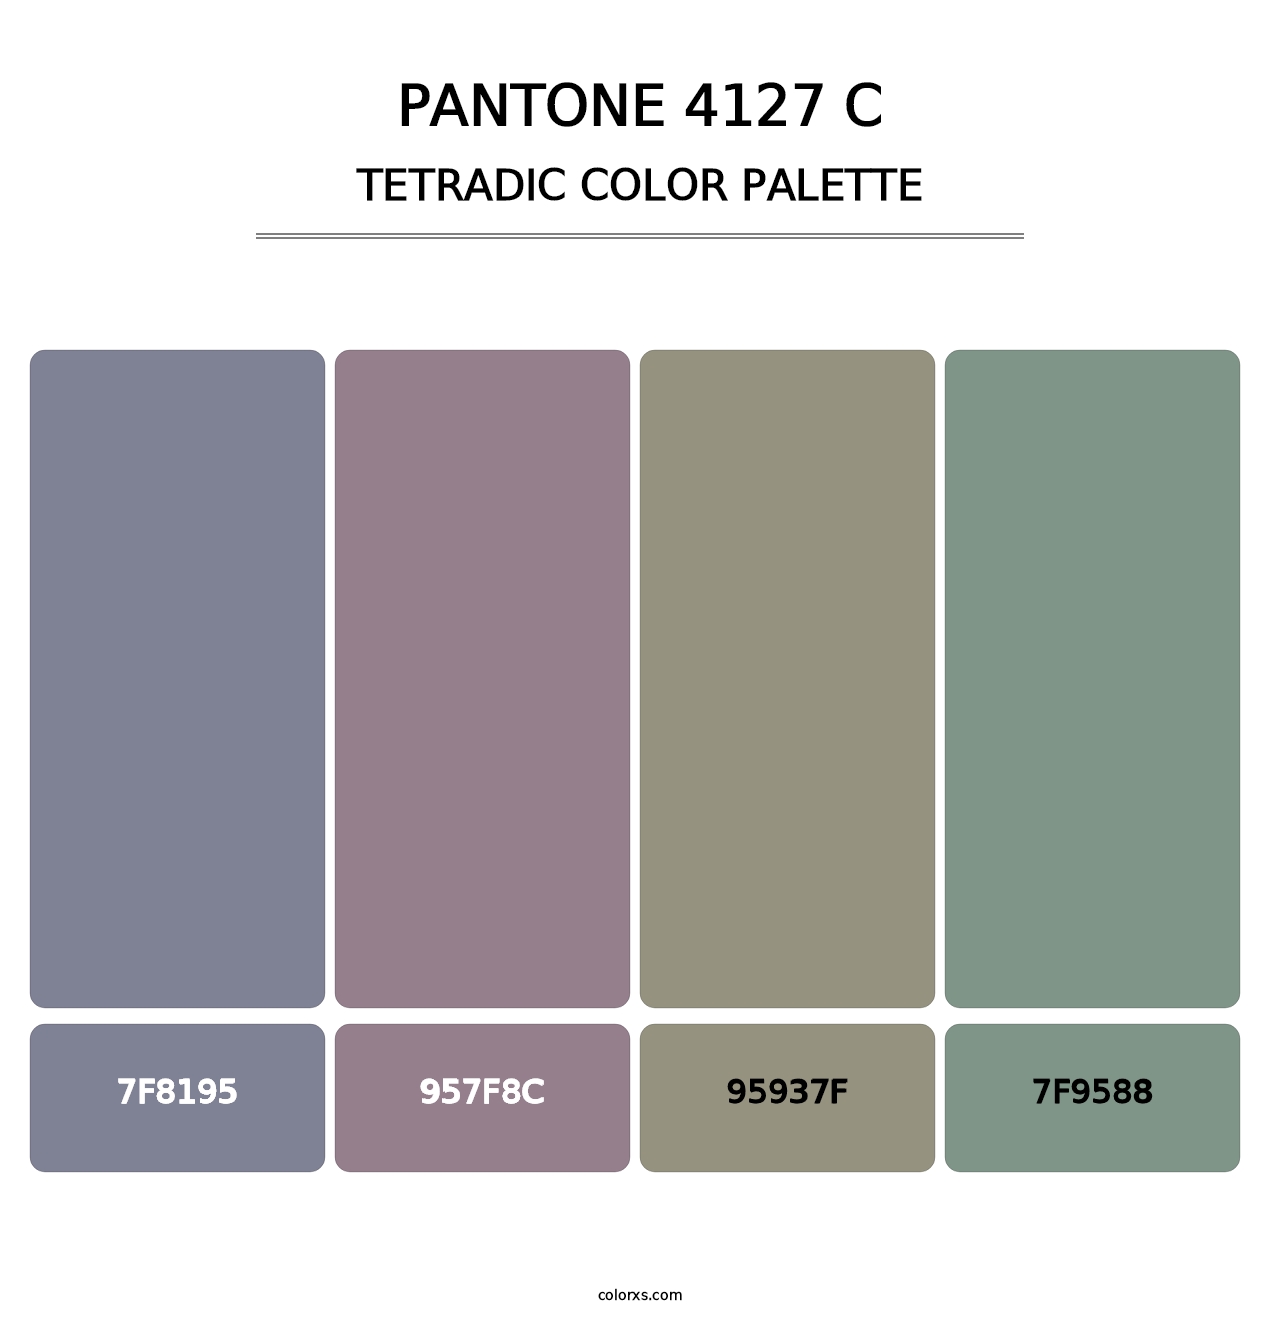 PANTONE 4127 C - Tetradic Color Palette